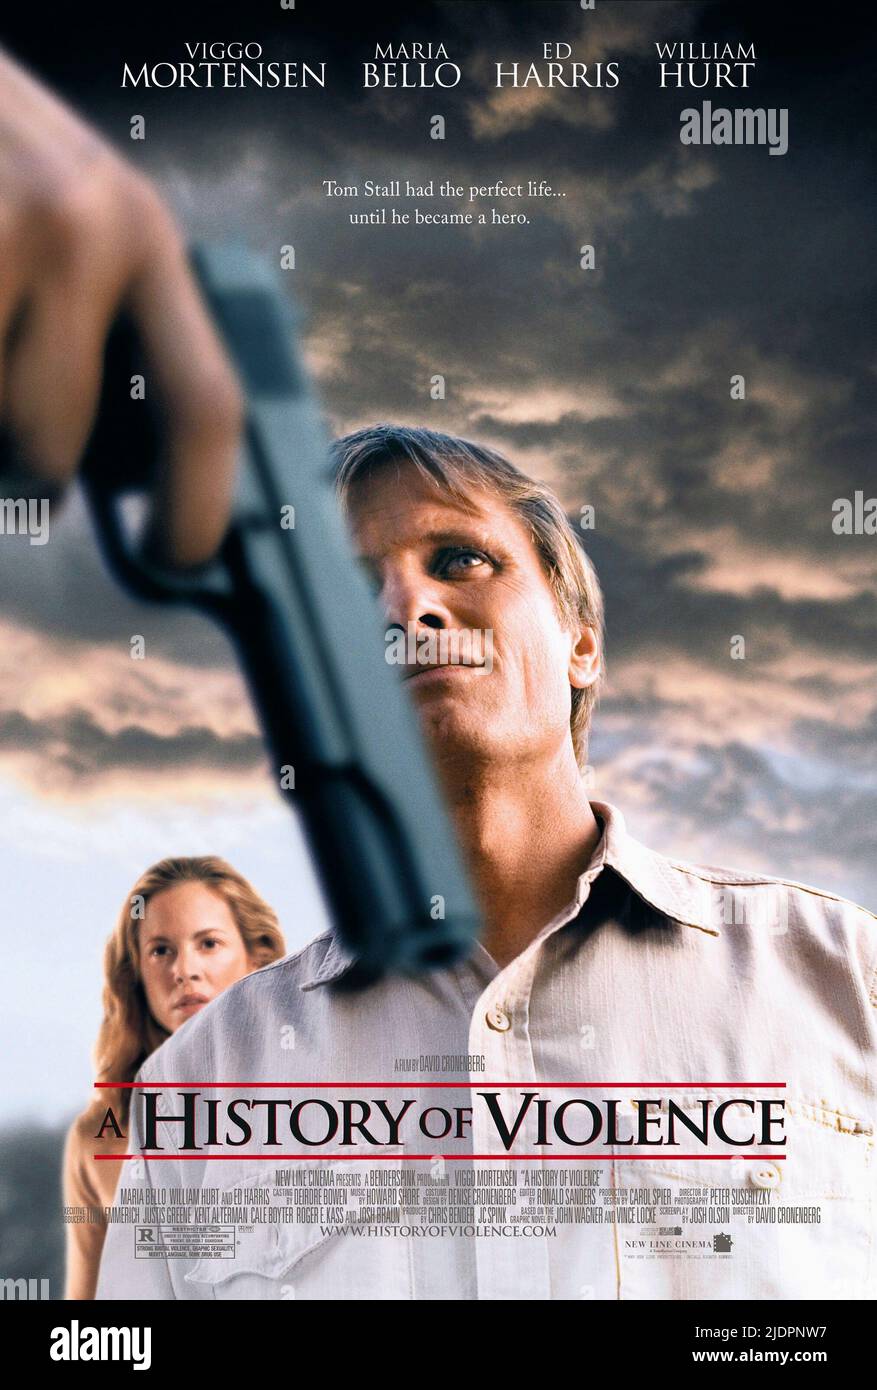 BELLO,MORTENSEN, A HISTORY OF VIOLENCE, 2005, Stock Photo